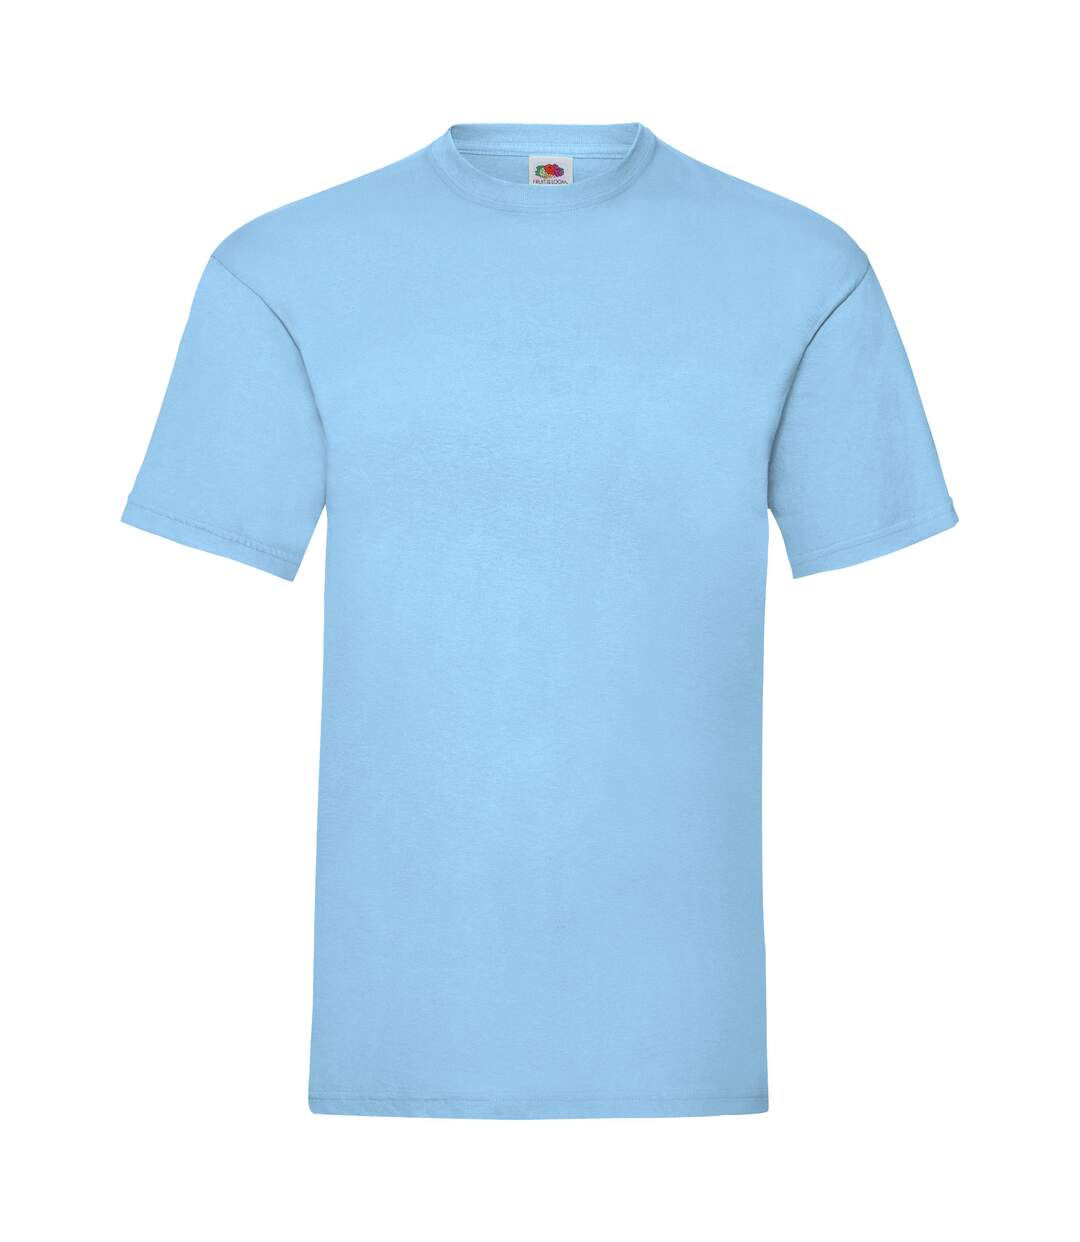 Fruit Of The Loom - T-shirt manches courtes - Homme (Bleu clair) - UTBC330